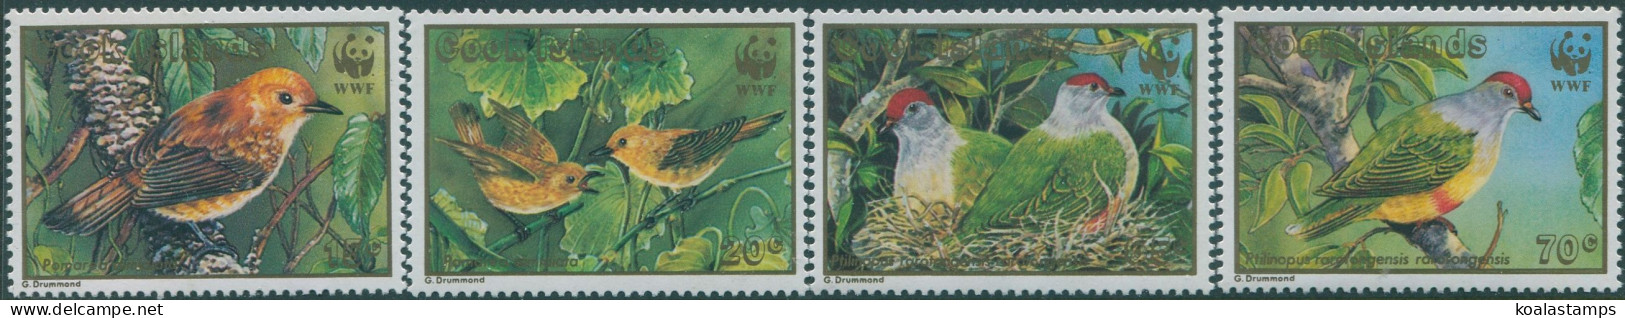 Cook Islands 1989 SG1222-1225 Endangered Birds Set MNH - Cook Islands